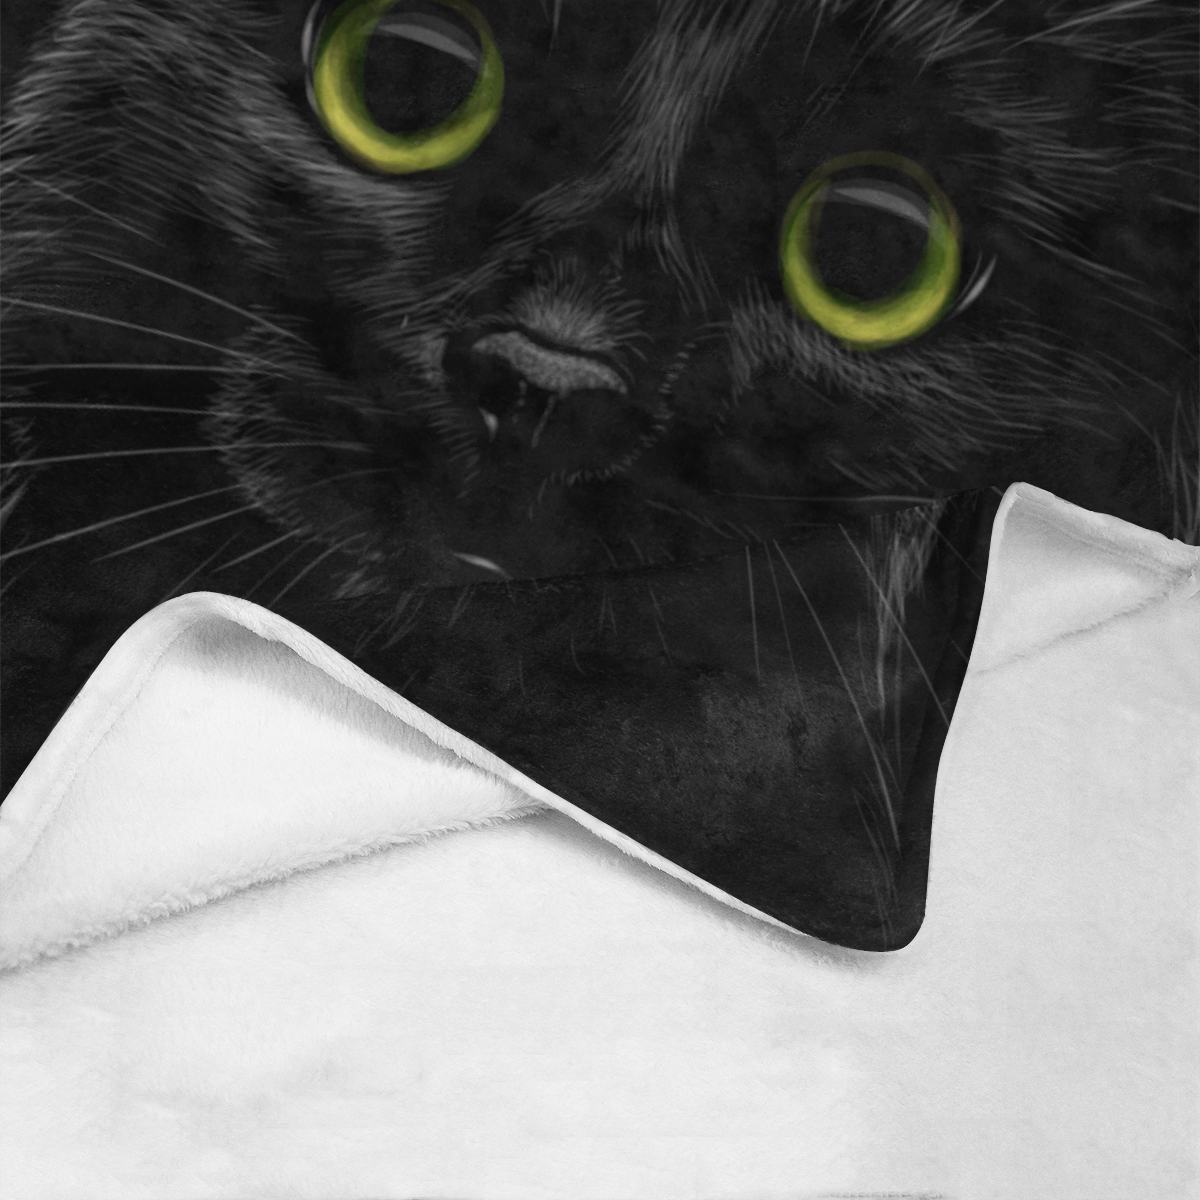 Black Cat Ultra-Soft Micro Fleece Blanket 30''x40''